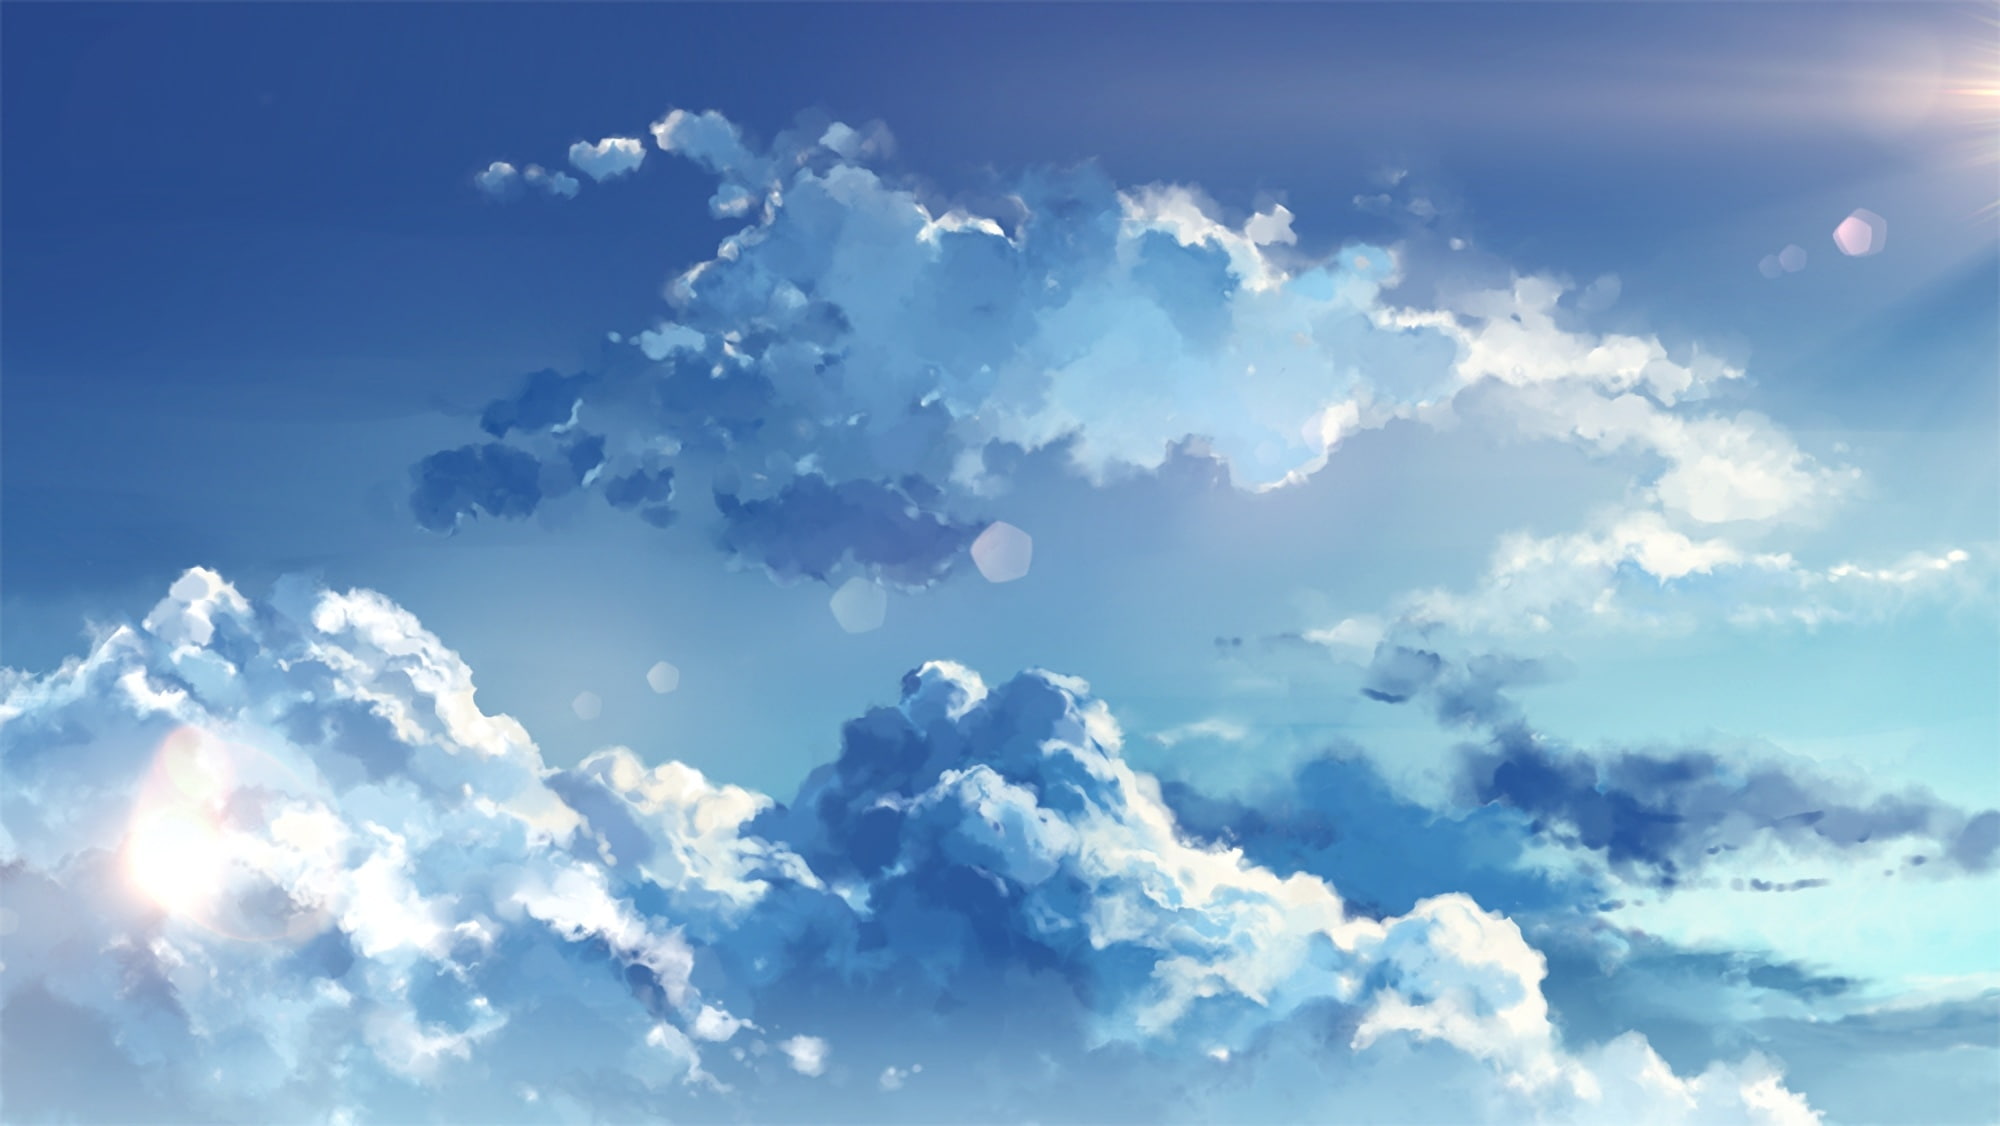 anime clouds, sky, cloud - sky, blue, beauty in nature, cloudscape